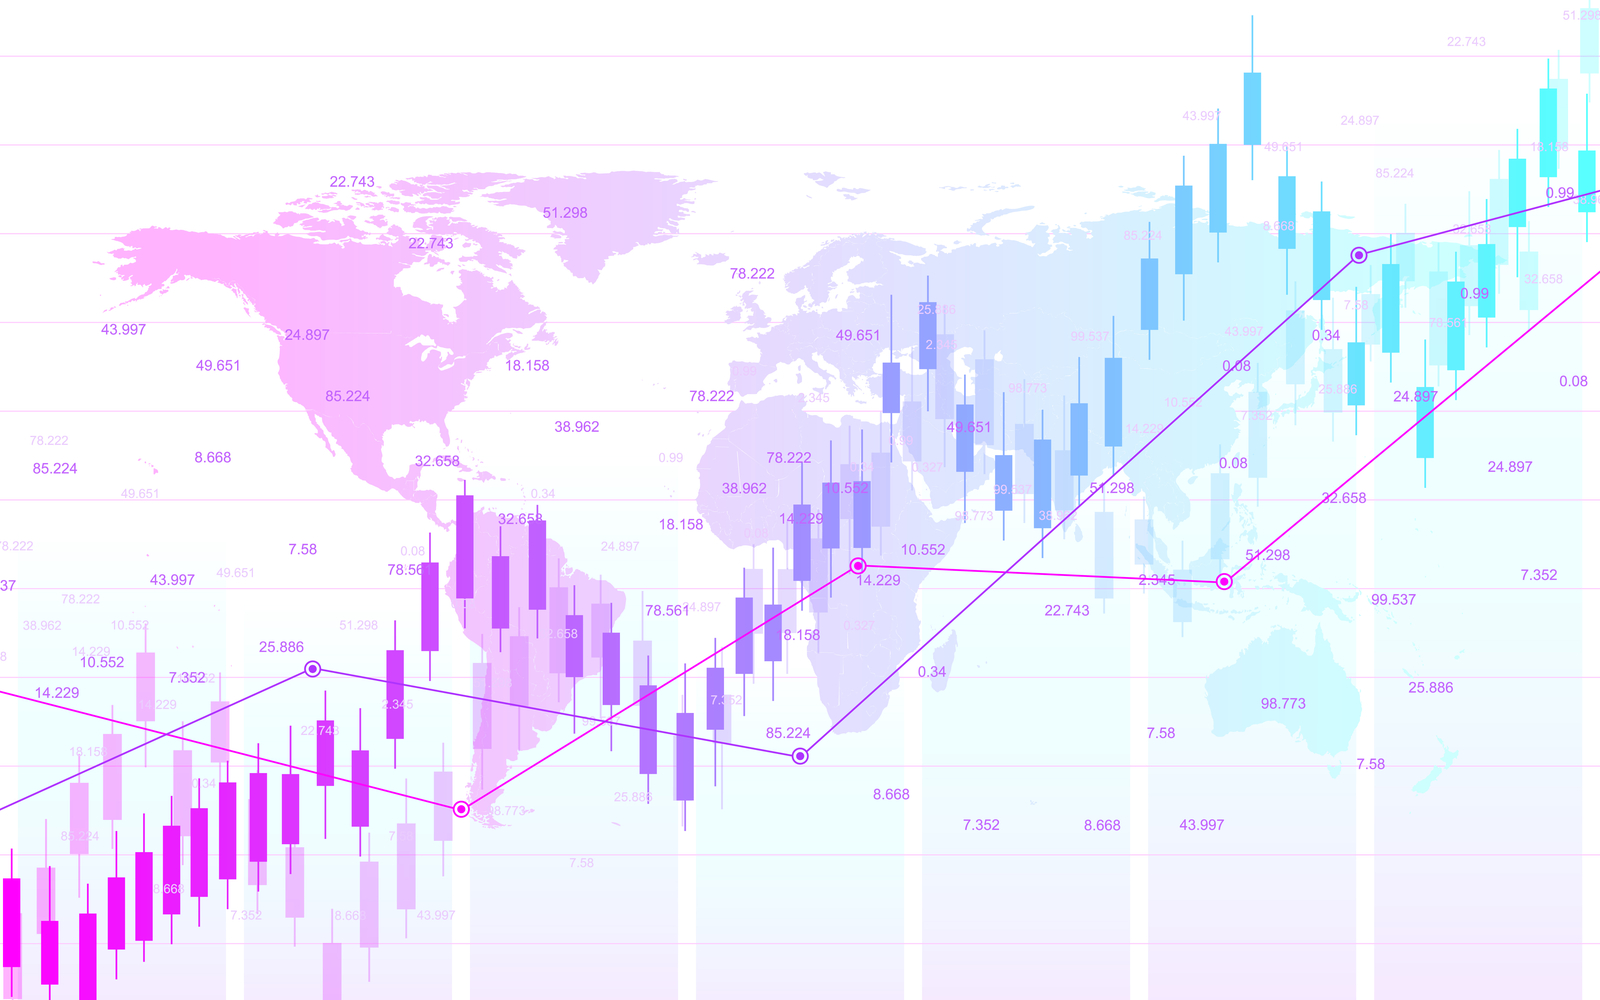 global markets